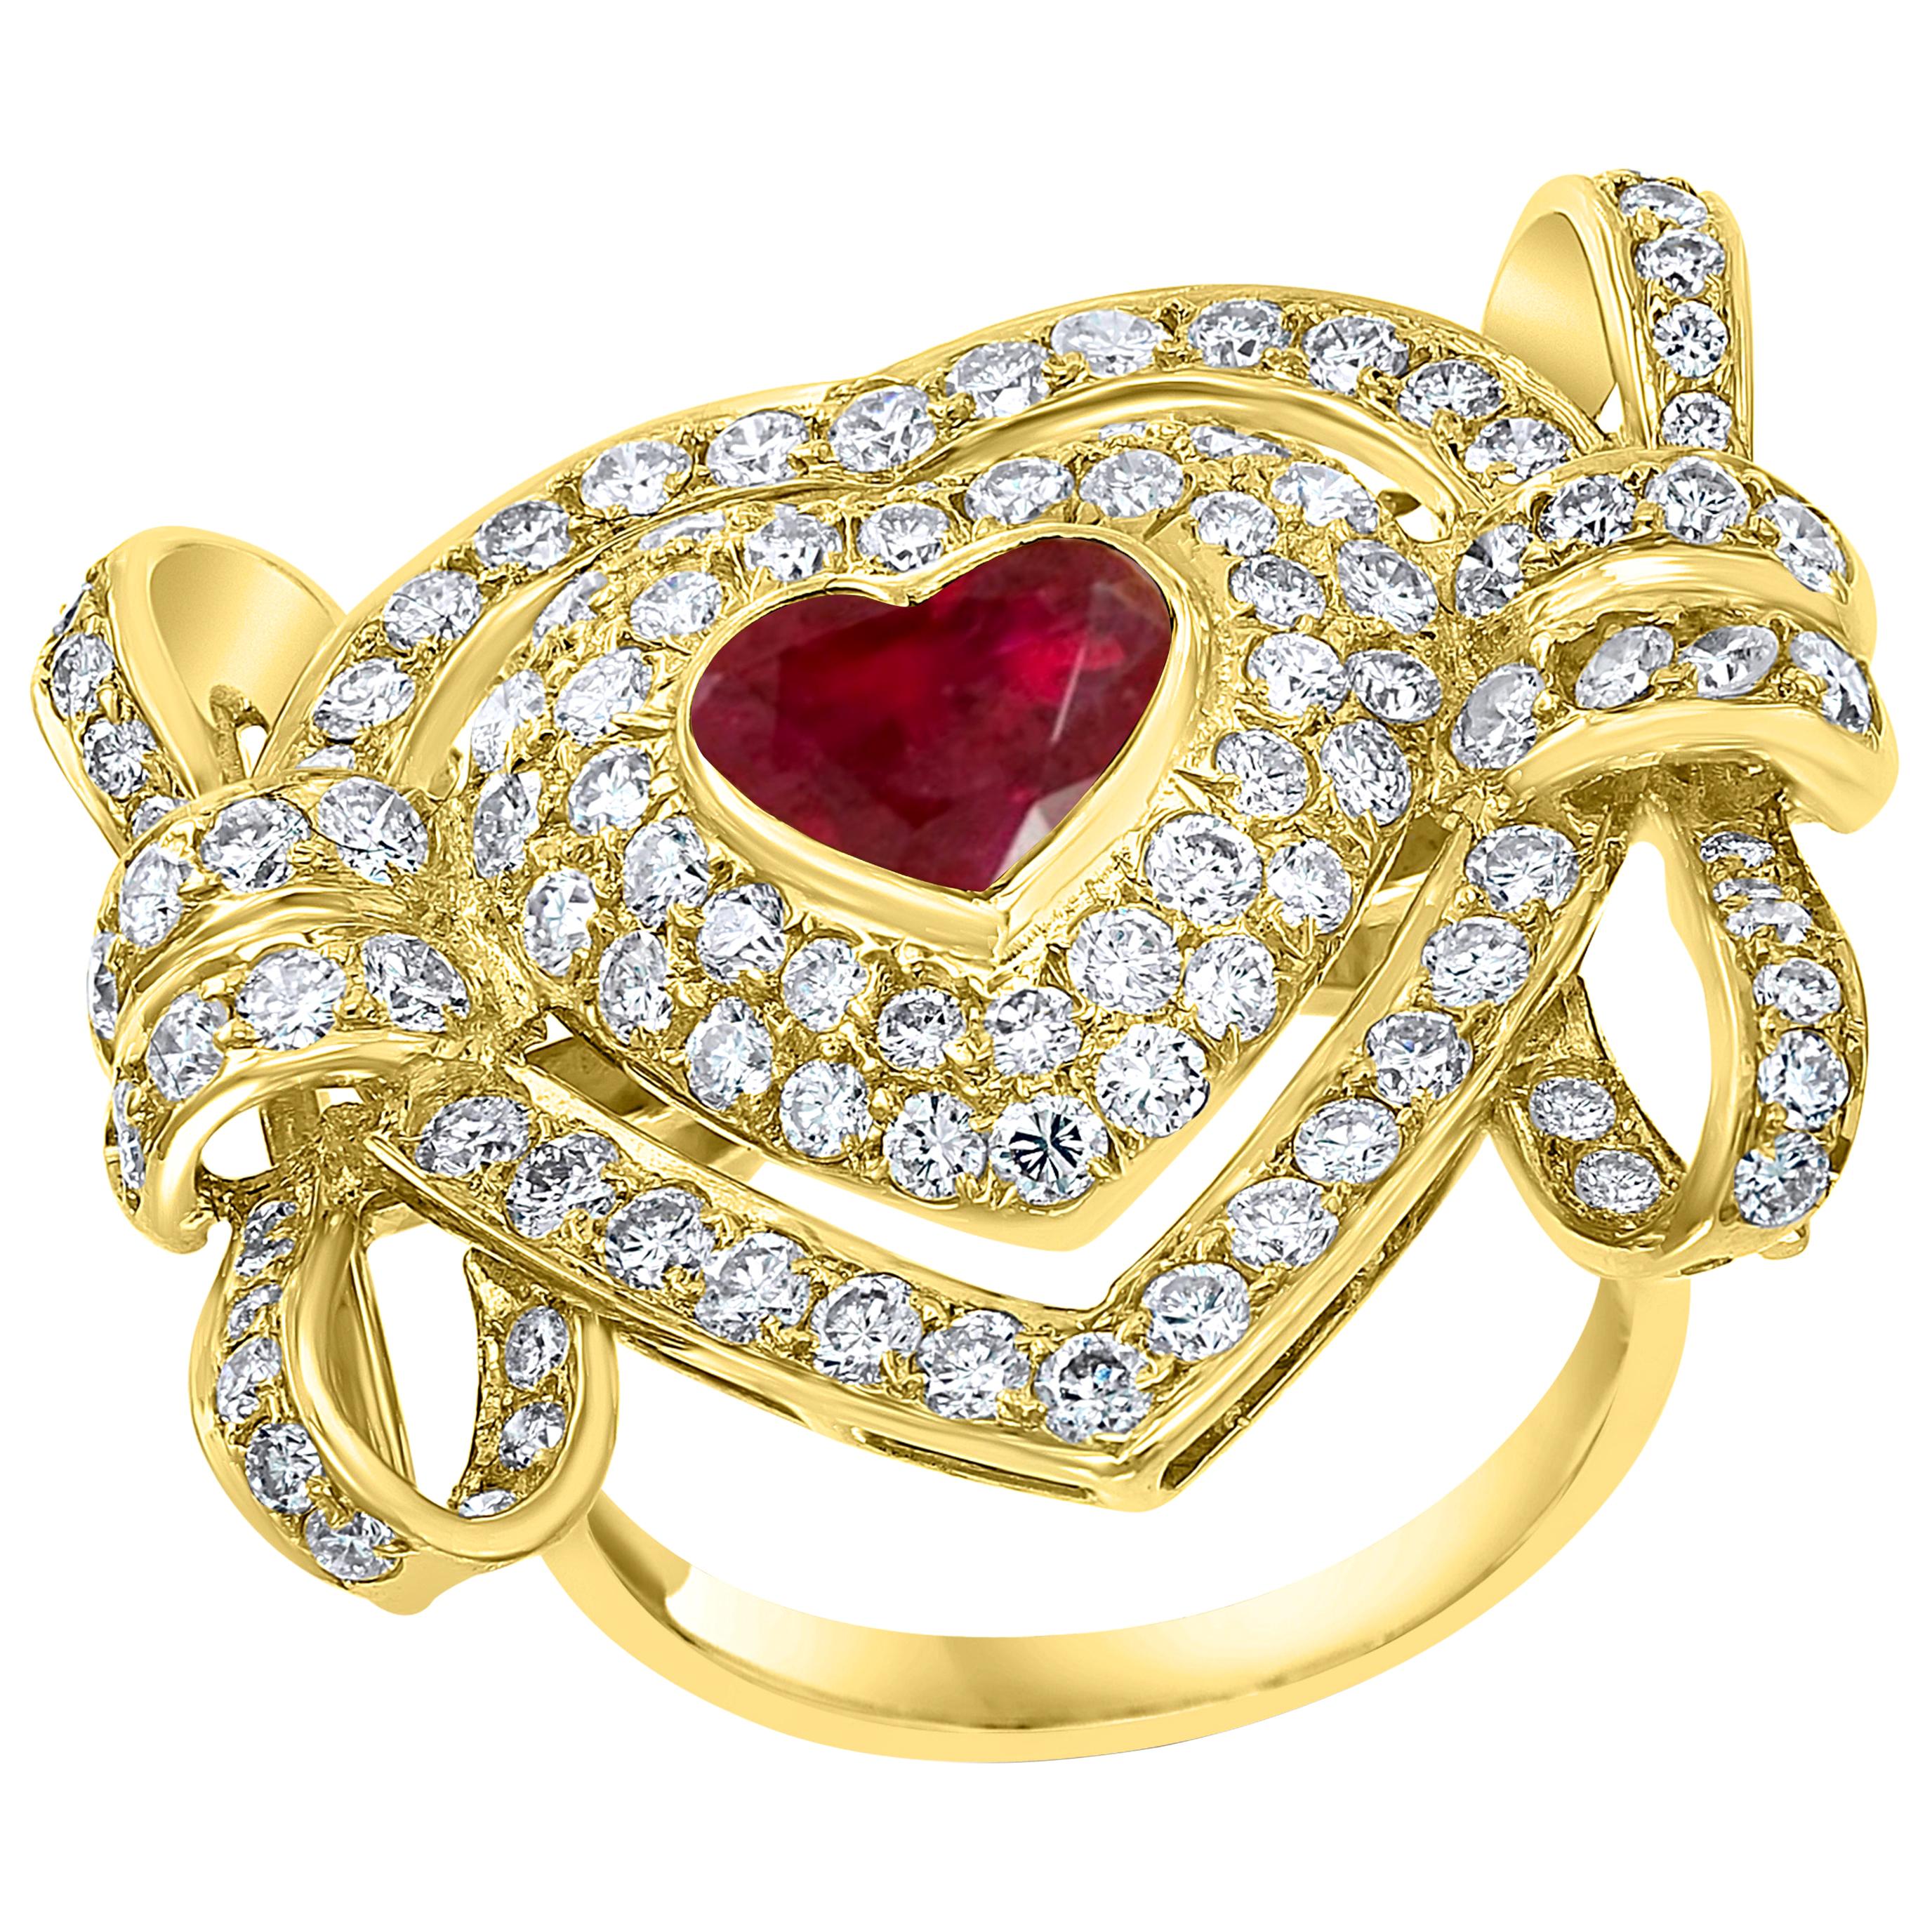 1.5 Carat Natural Heart Shape Ruby and 3.5 Carat Diamond 18 Karat Gold Ring